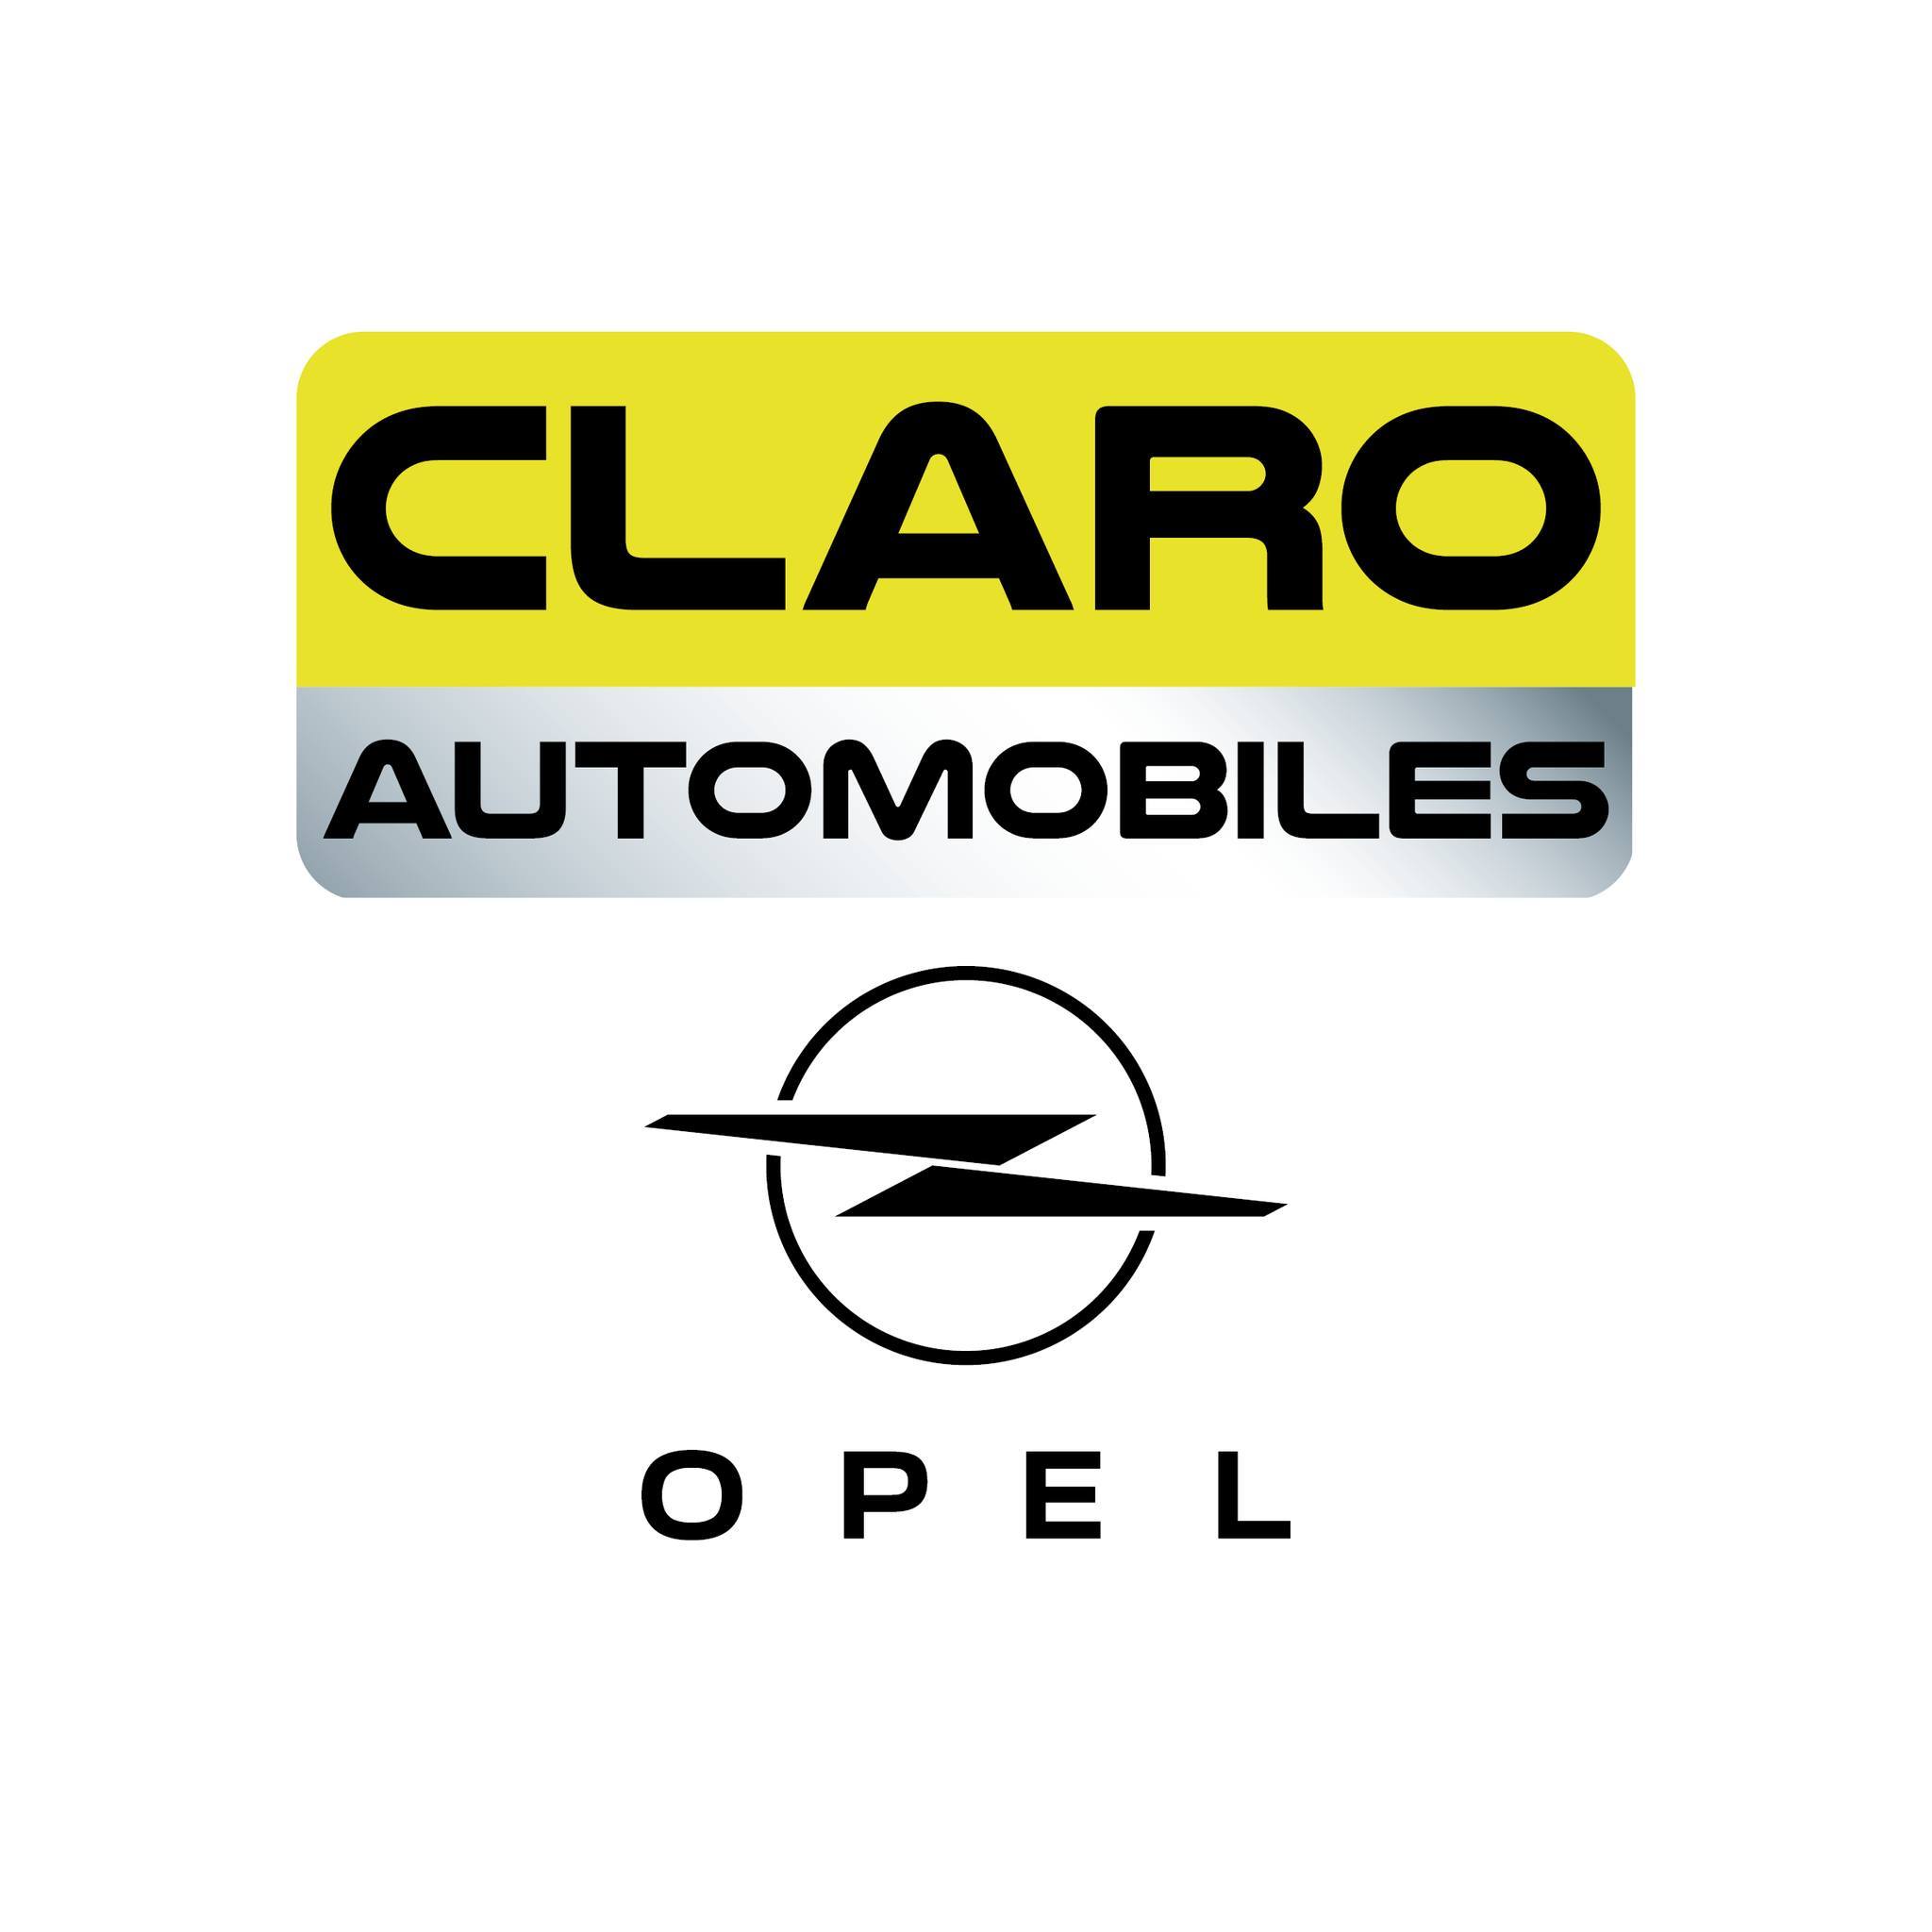 Claro Automobile Opel - Site internet